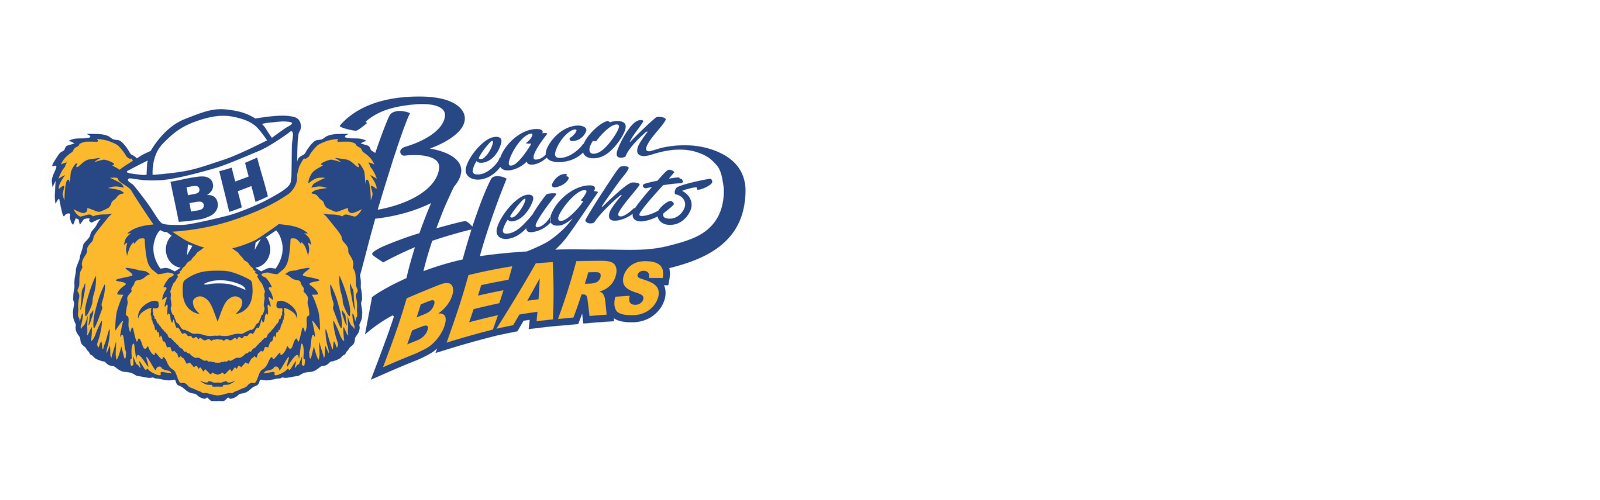 Beacon Heights Bears logo 